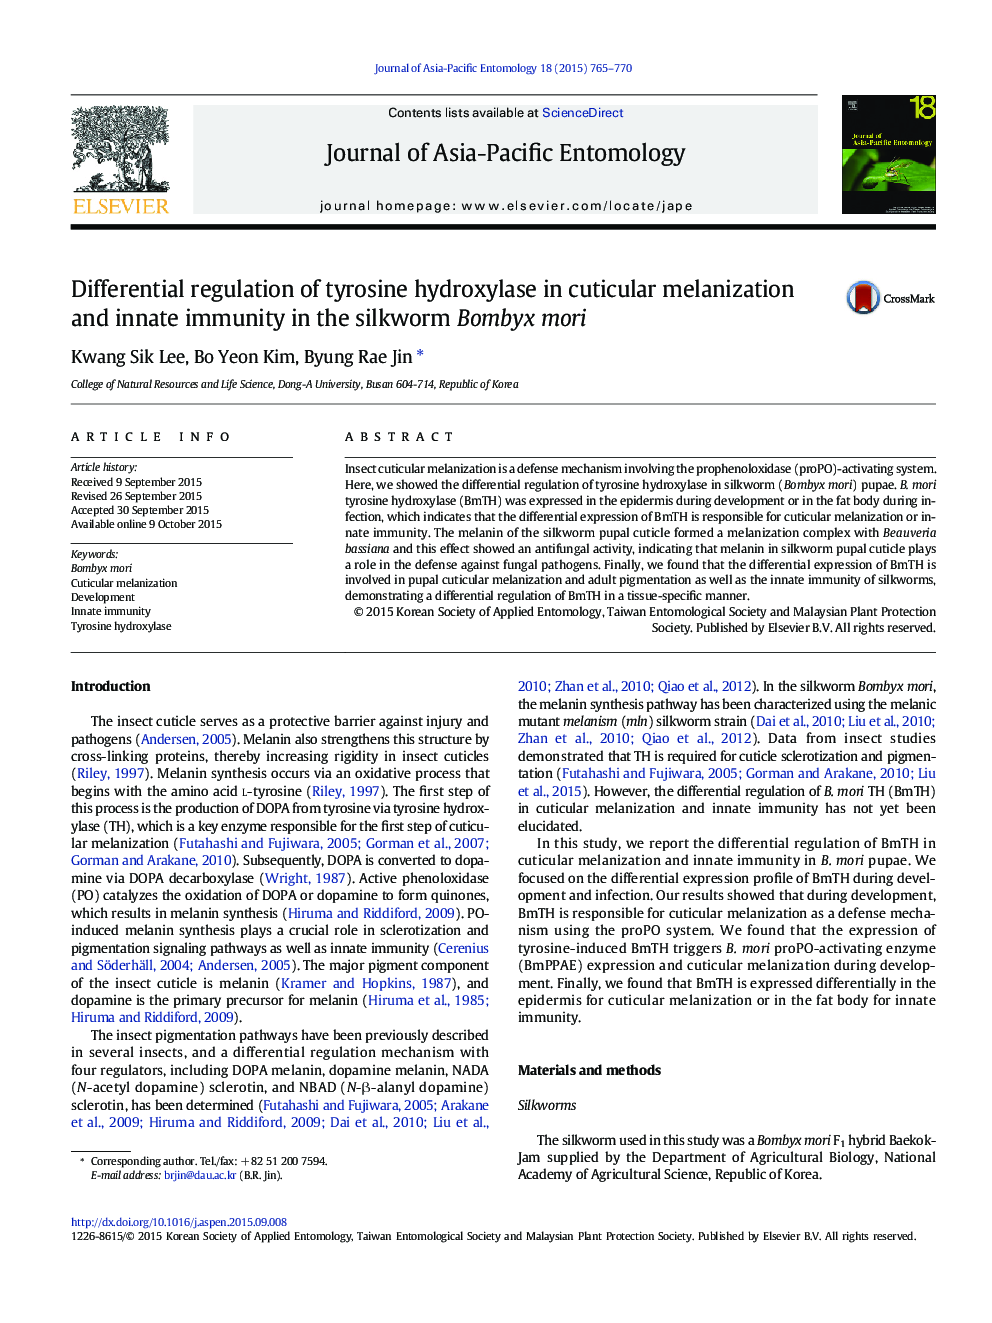 Differential regulation of tyrosine hydroxylase in cuticular melanization and innate immunity in the silkworm Bombyx mori